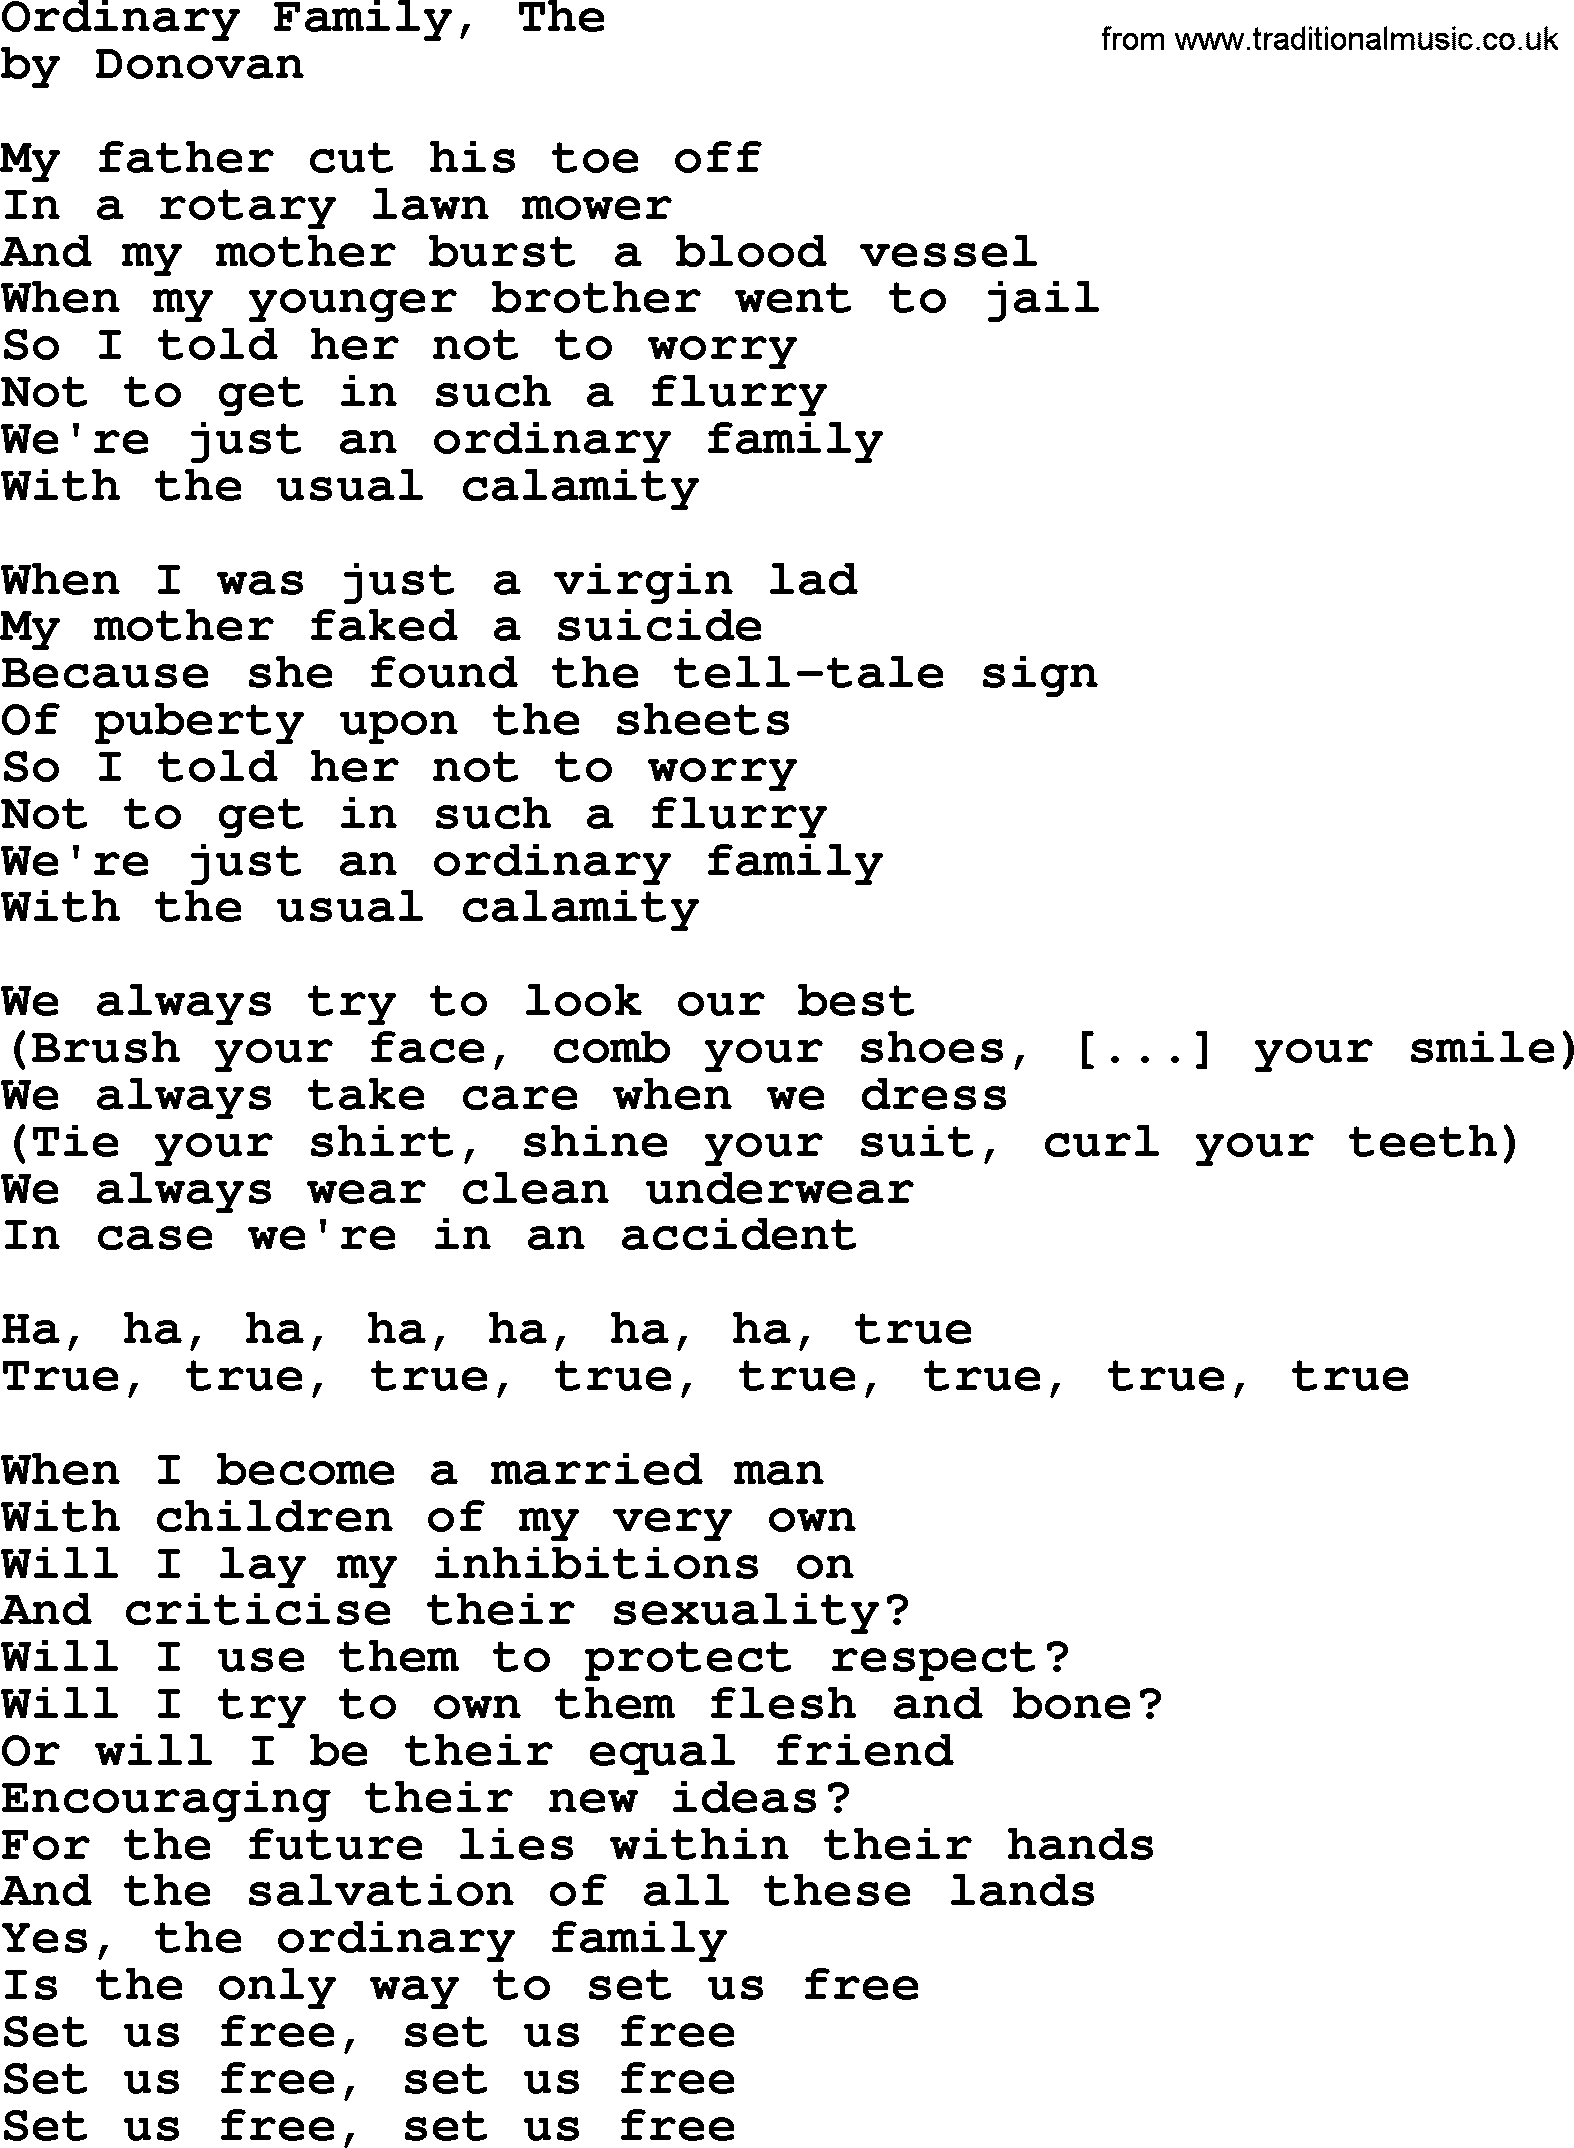 Donovan Leitch song: Ordinary Family, The lyrics